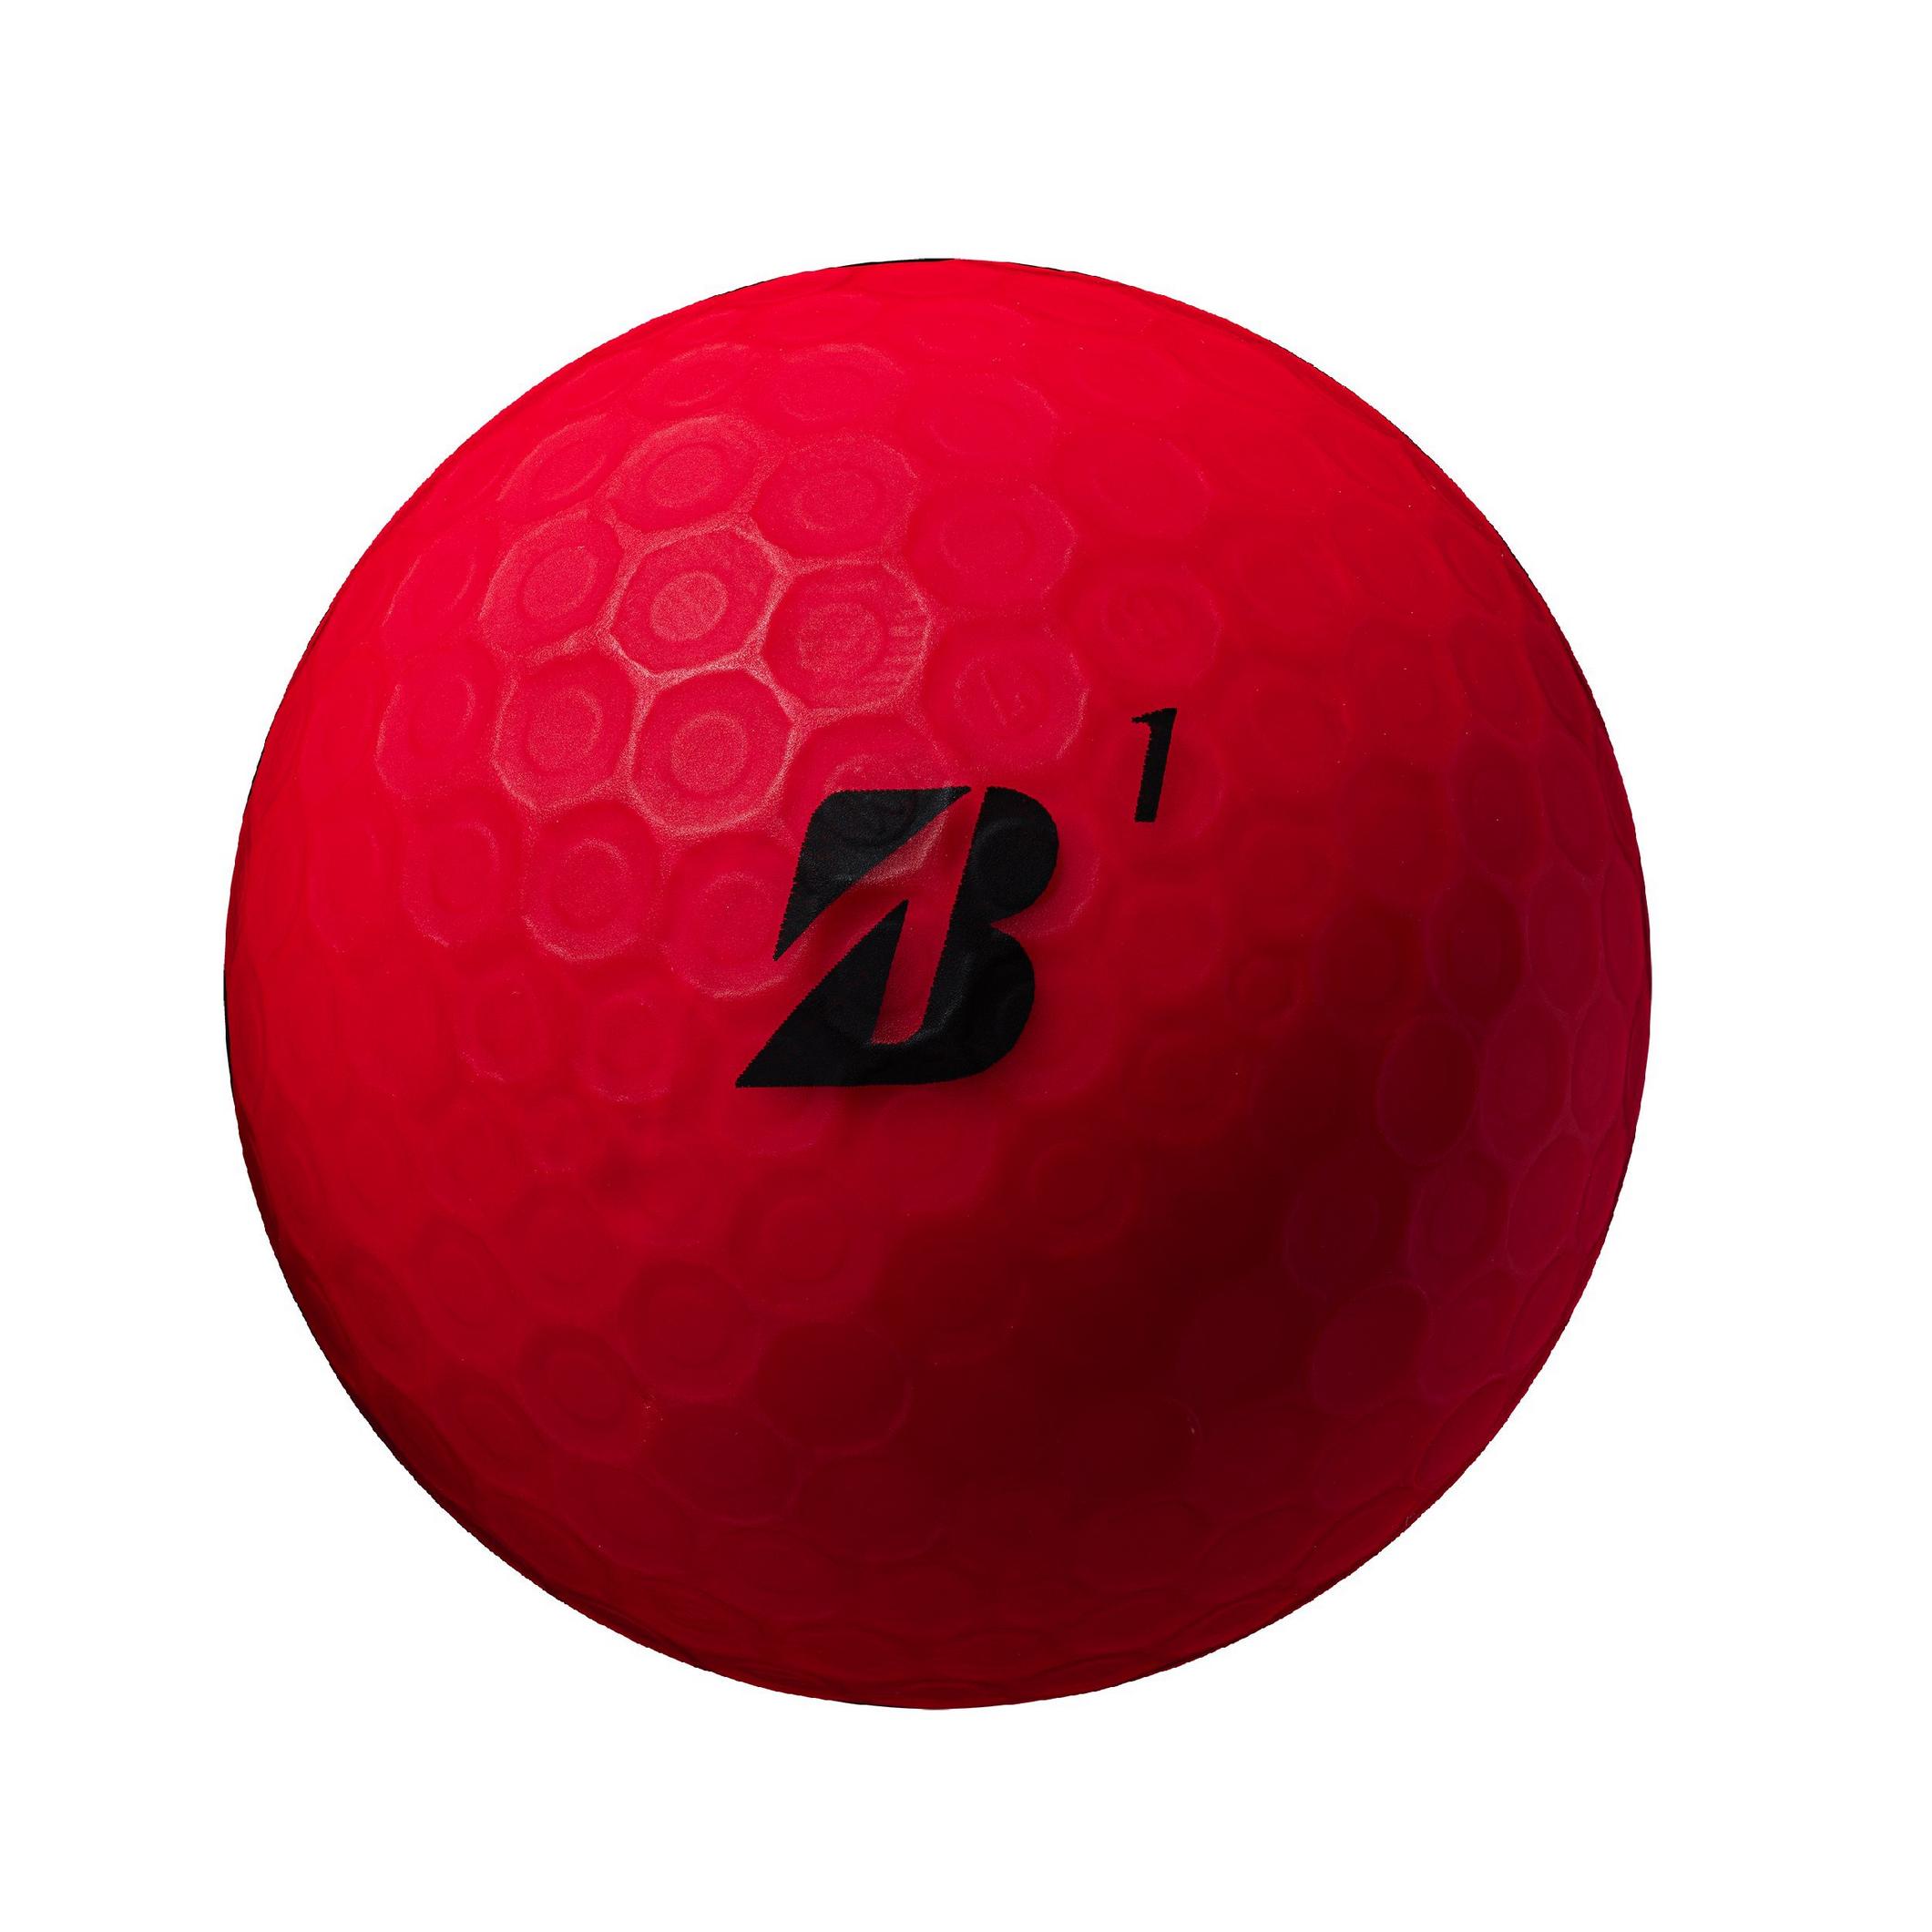 Golf Gifts For Kids. Fun Colored Golf Balls. Chromax Golf.